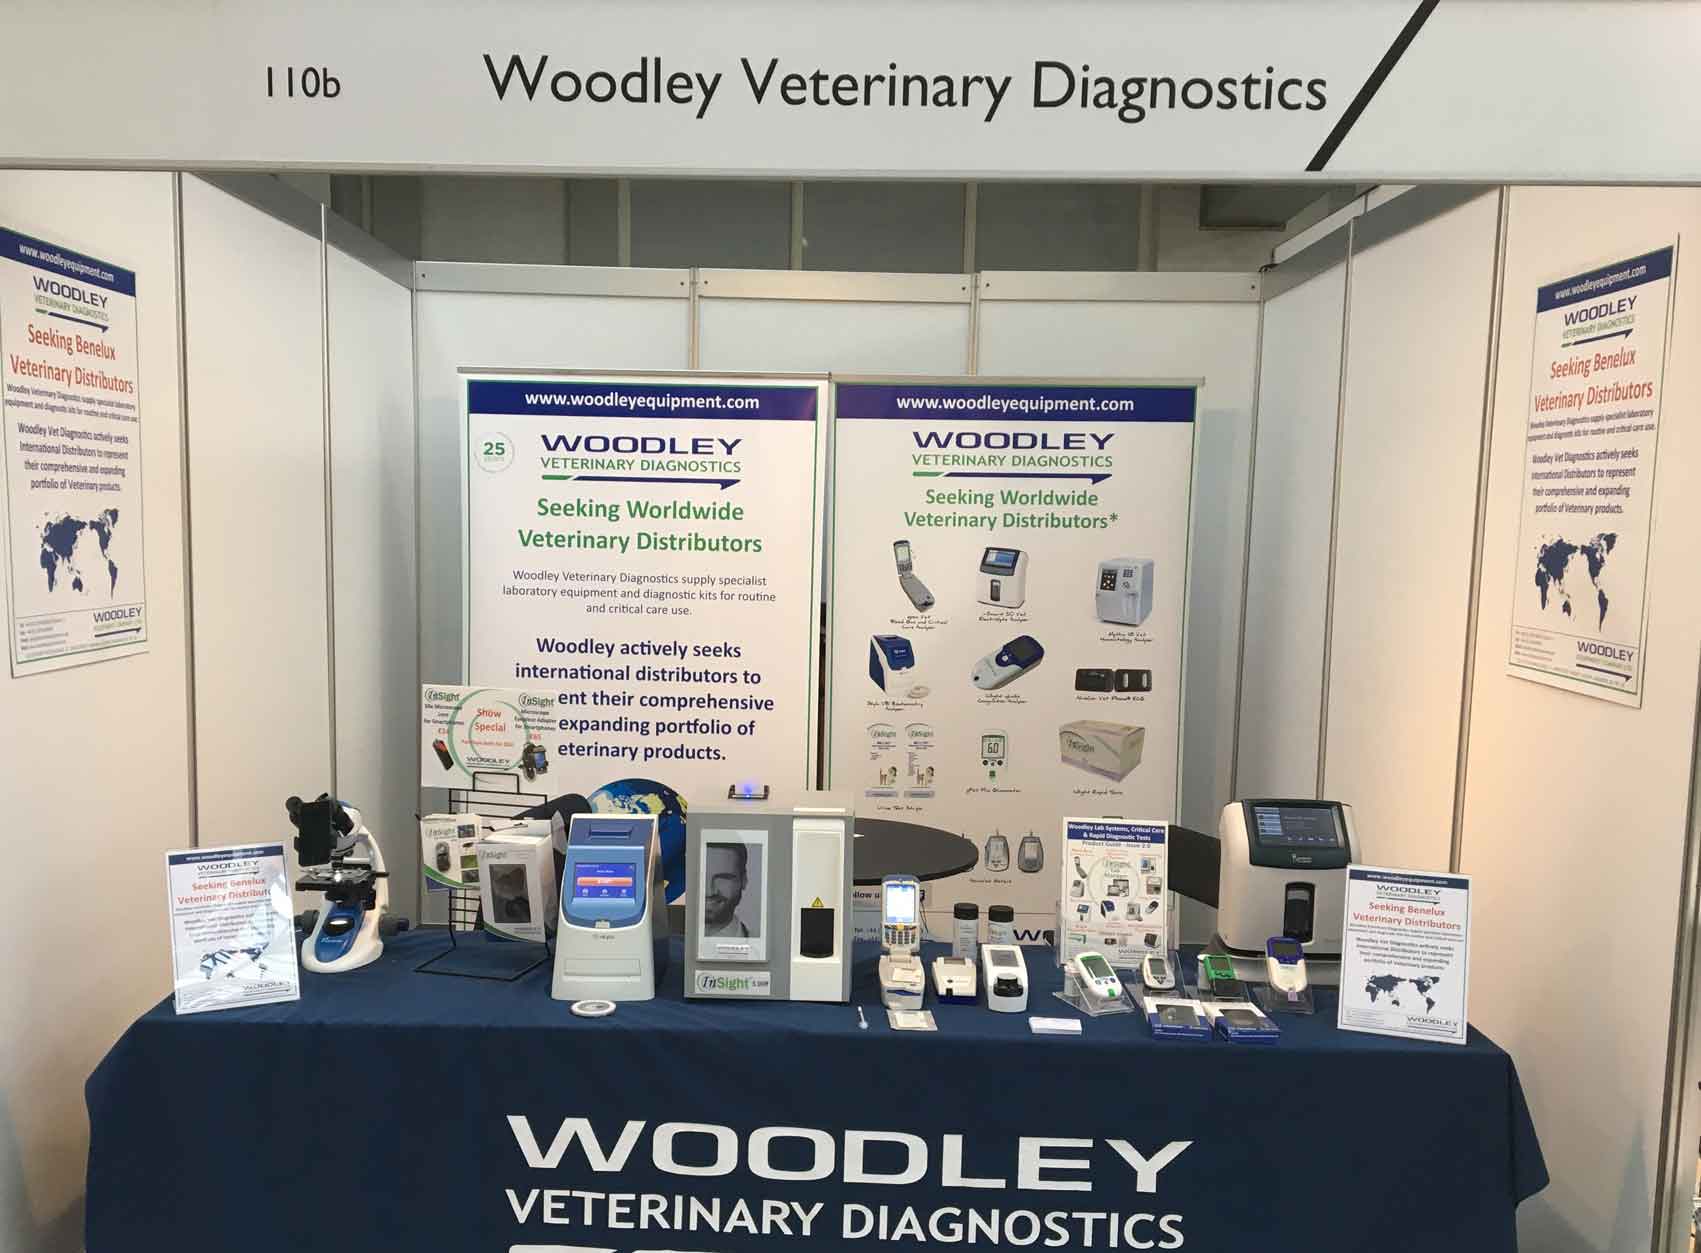 Woodley Vet Diagnostics are Exhibiting at Voorjaarsdagen European Veterinary Conference